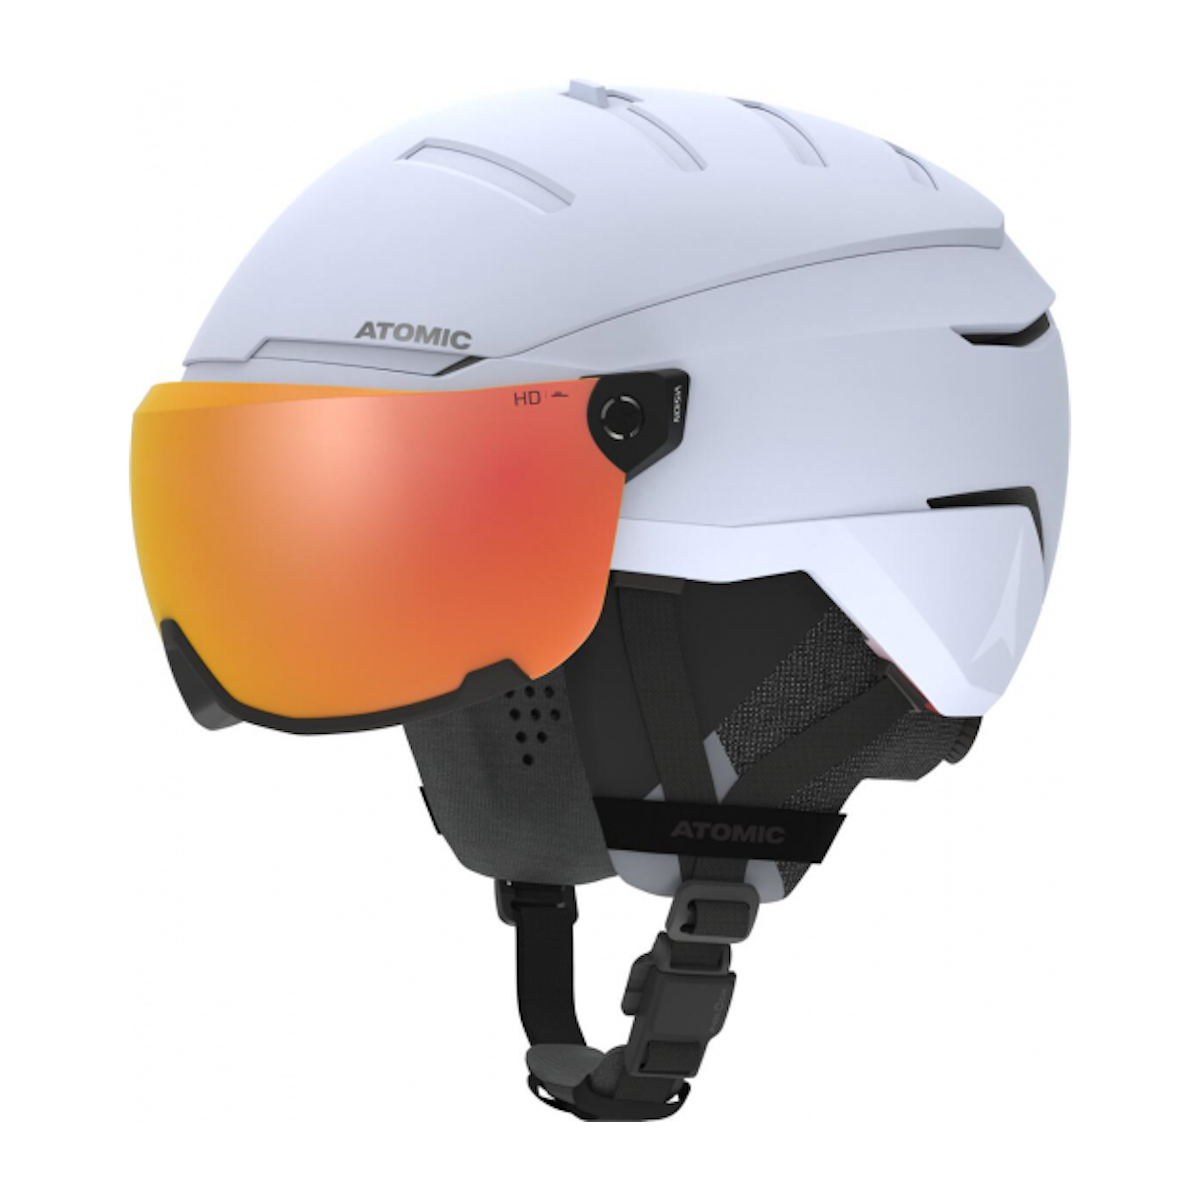 ATOMIC SAVOR GT AMID VISOR HD CTD HD C2-3 helmet - light grey w/red